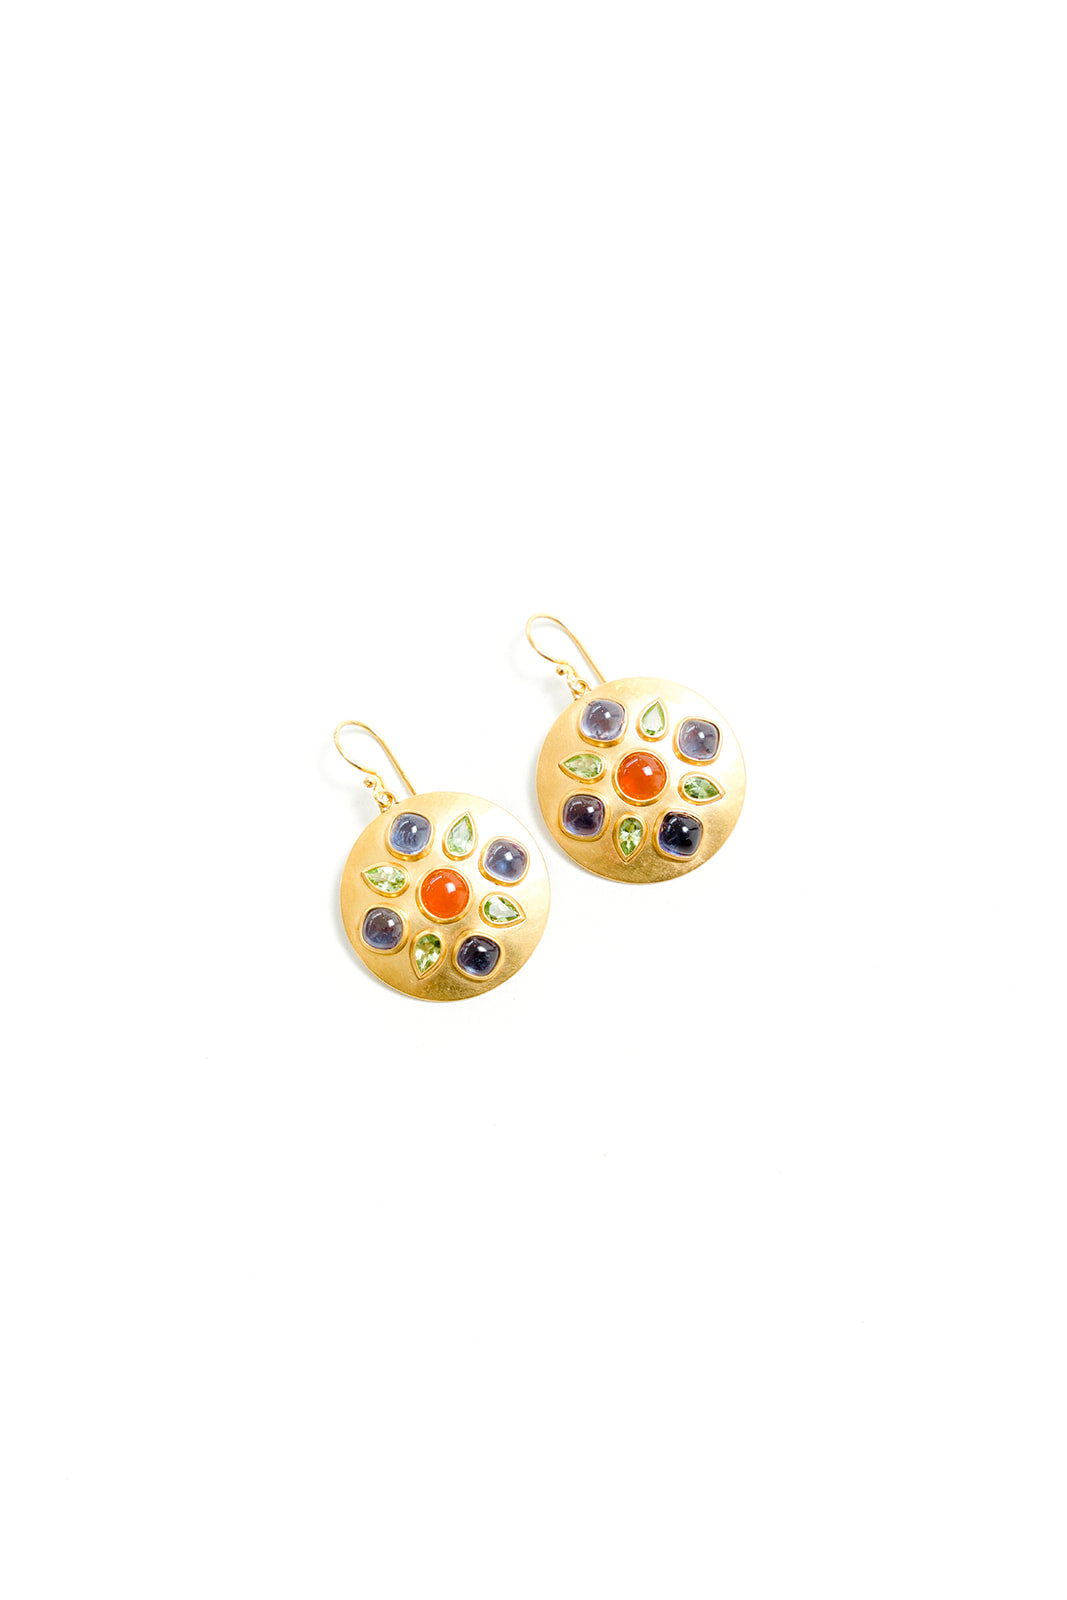 22K Yellow Gold Iolite, Peridot, and Fire Opal Disc Earrings